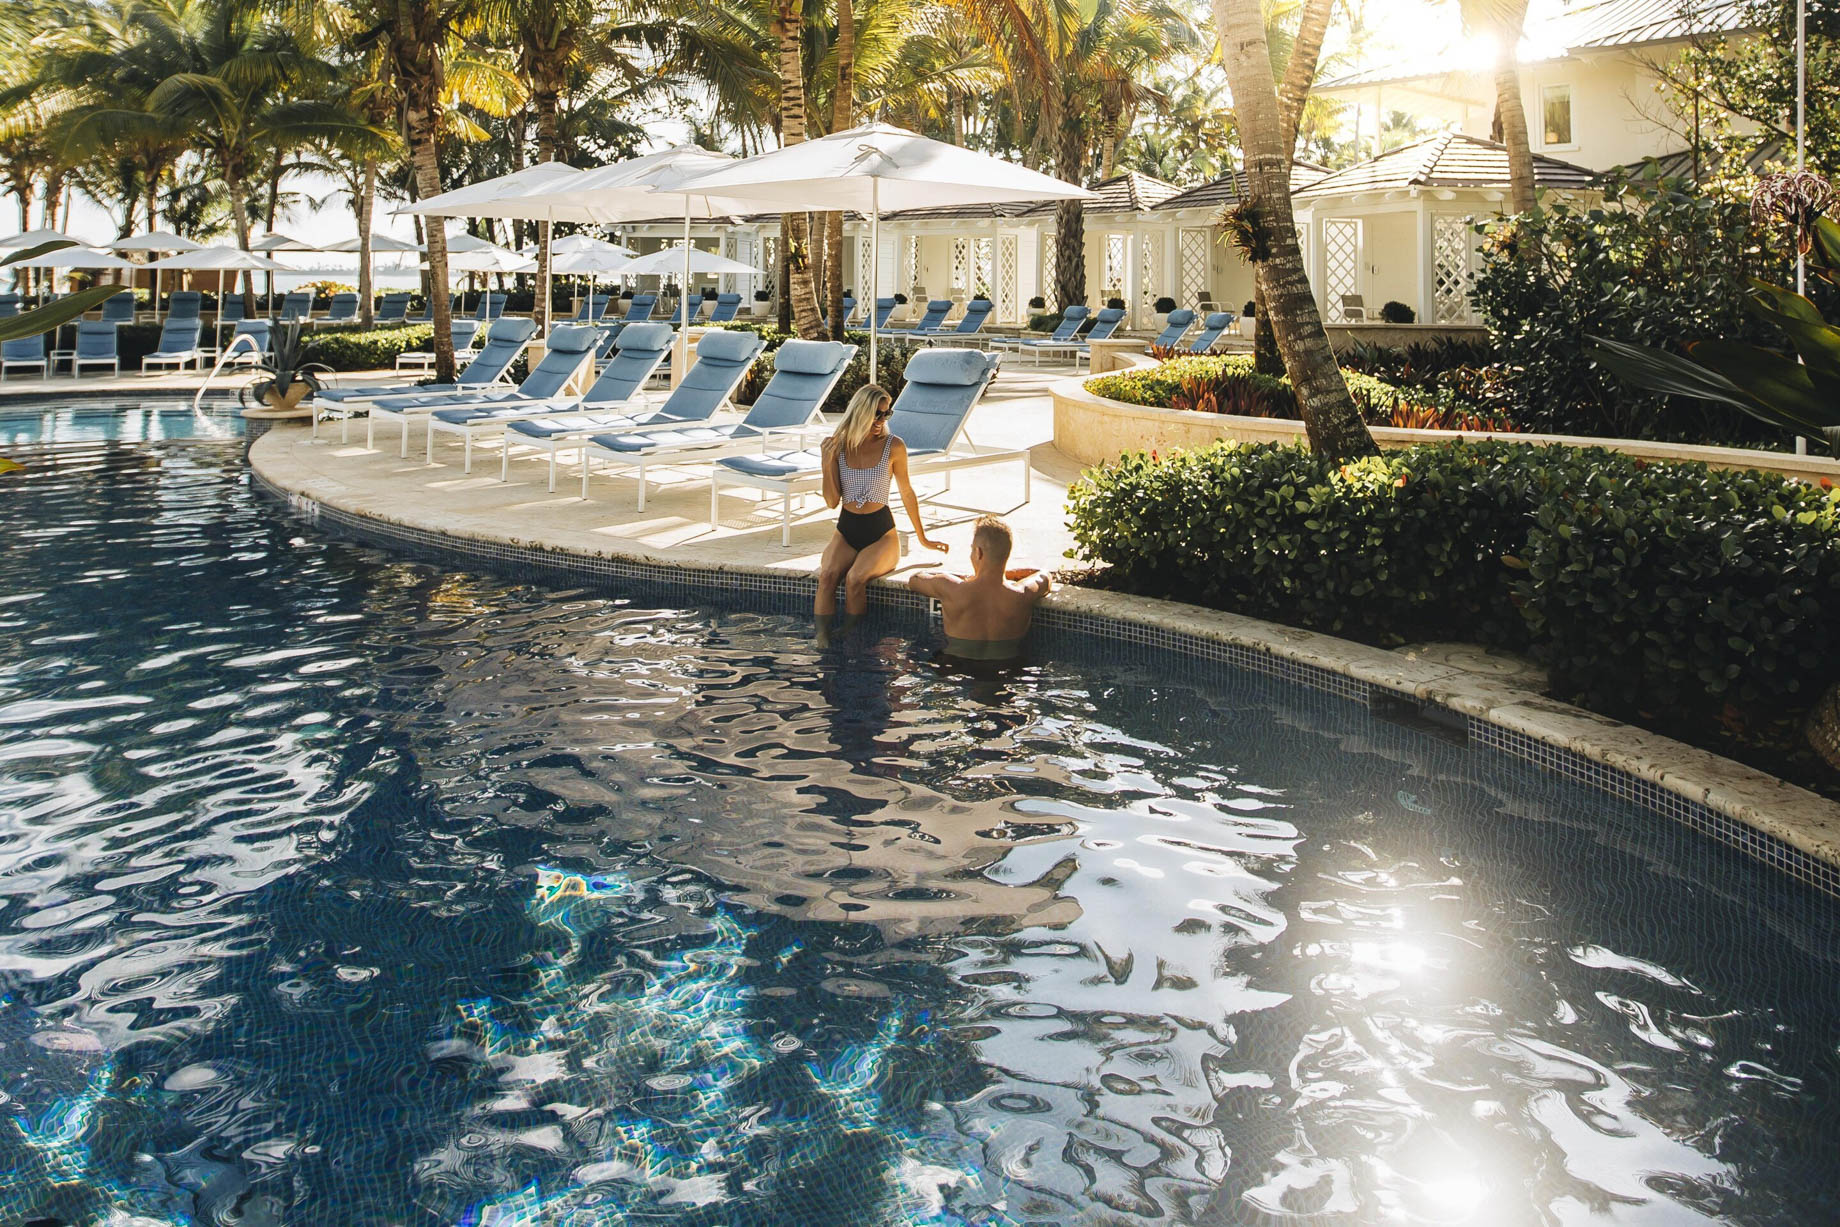 The St. Regis Bahia Beach Resort – Rio Grande, Puerto Rico – Seaside Pool